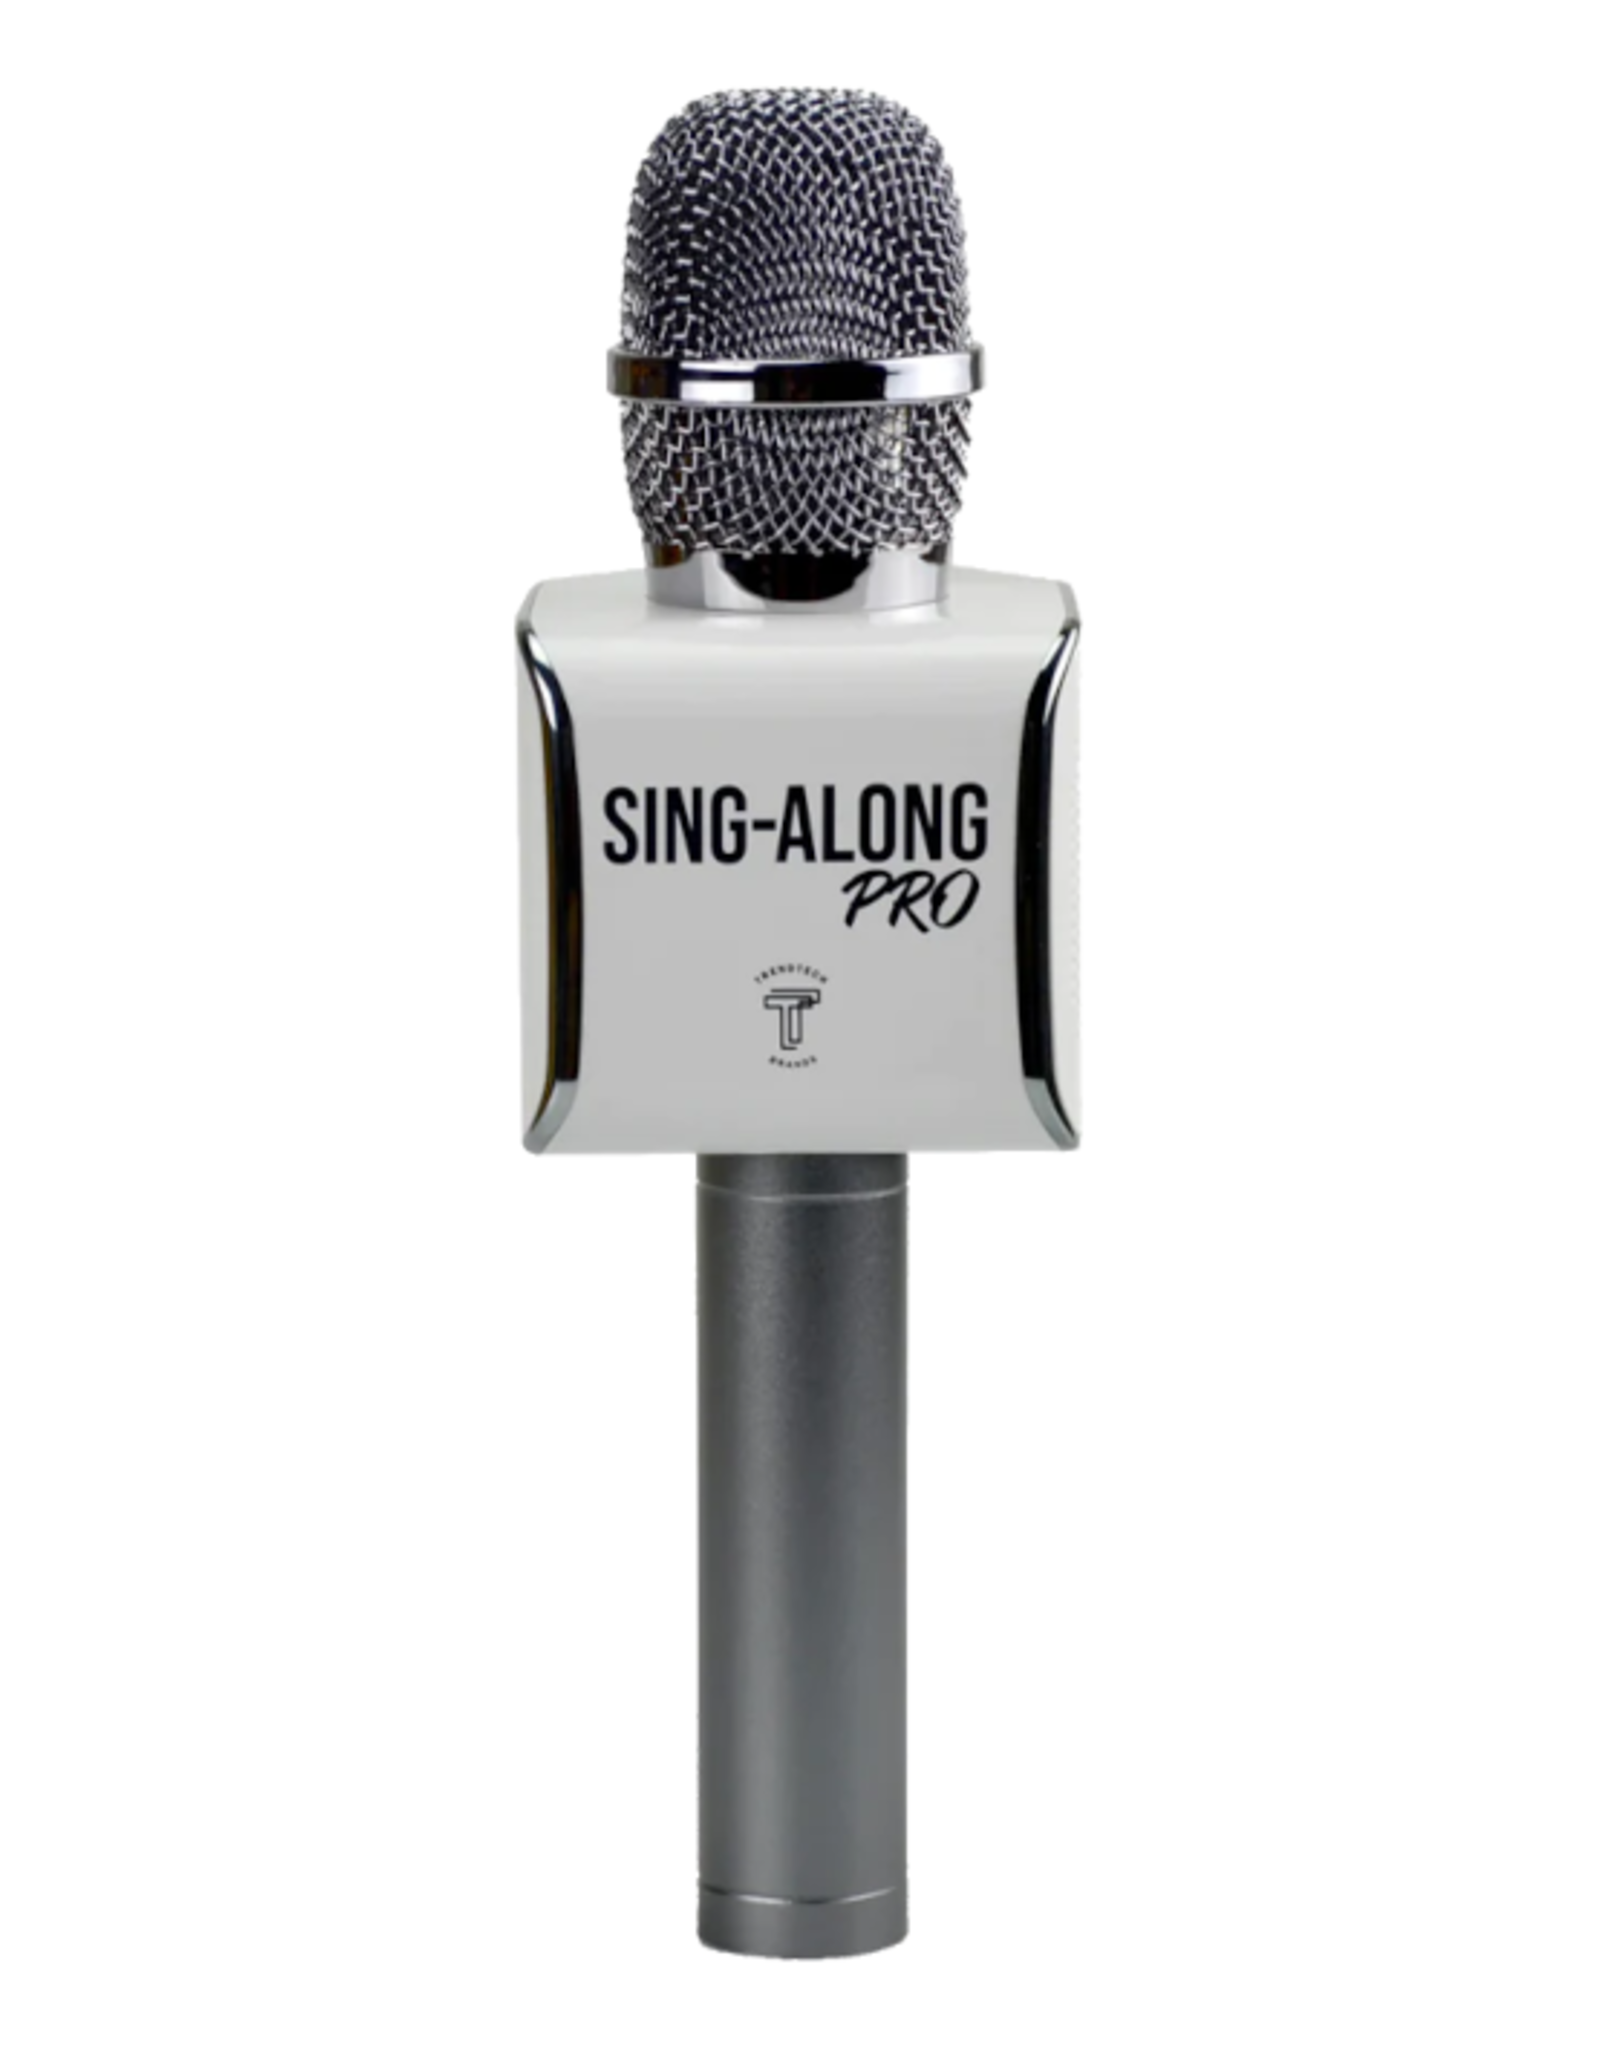 Sing-along PRO 3 Karaoke Microphone and Bluetooth Speaker All-in